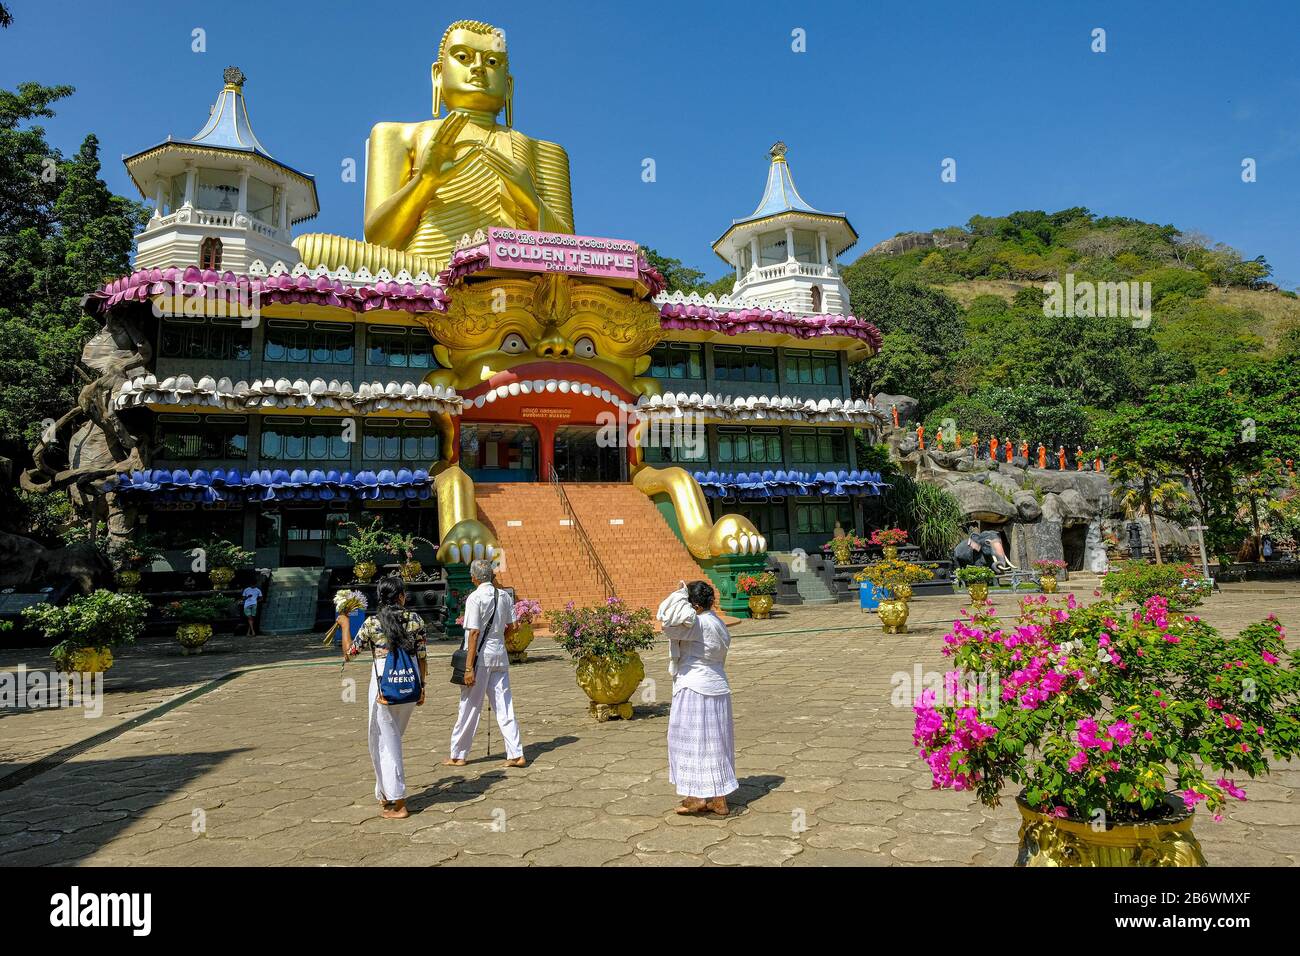 Dambulla, Sri Lanka - Februar 2020: Menschen, die den Goldenen Tempel von Dambula am 8. Februar 2020 in Dambulla, Sri Lanka besuchen. Stockfoto